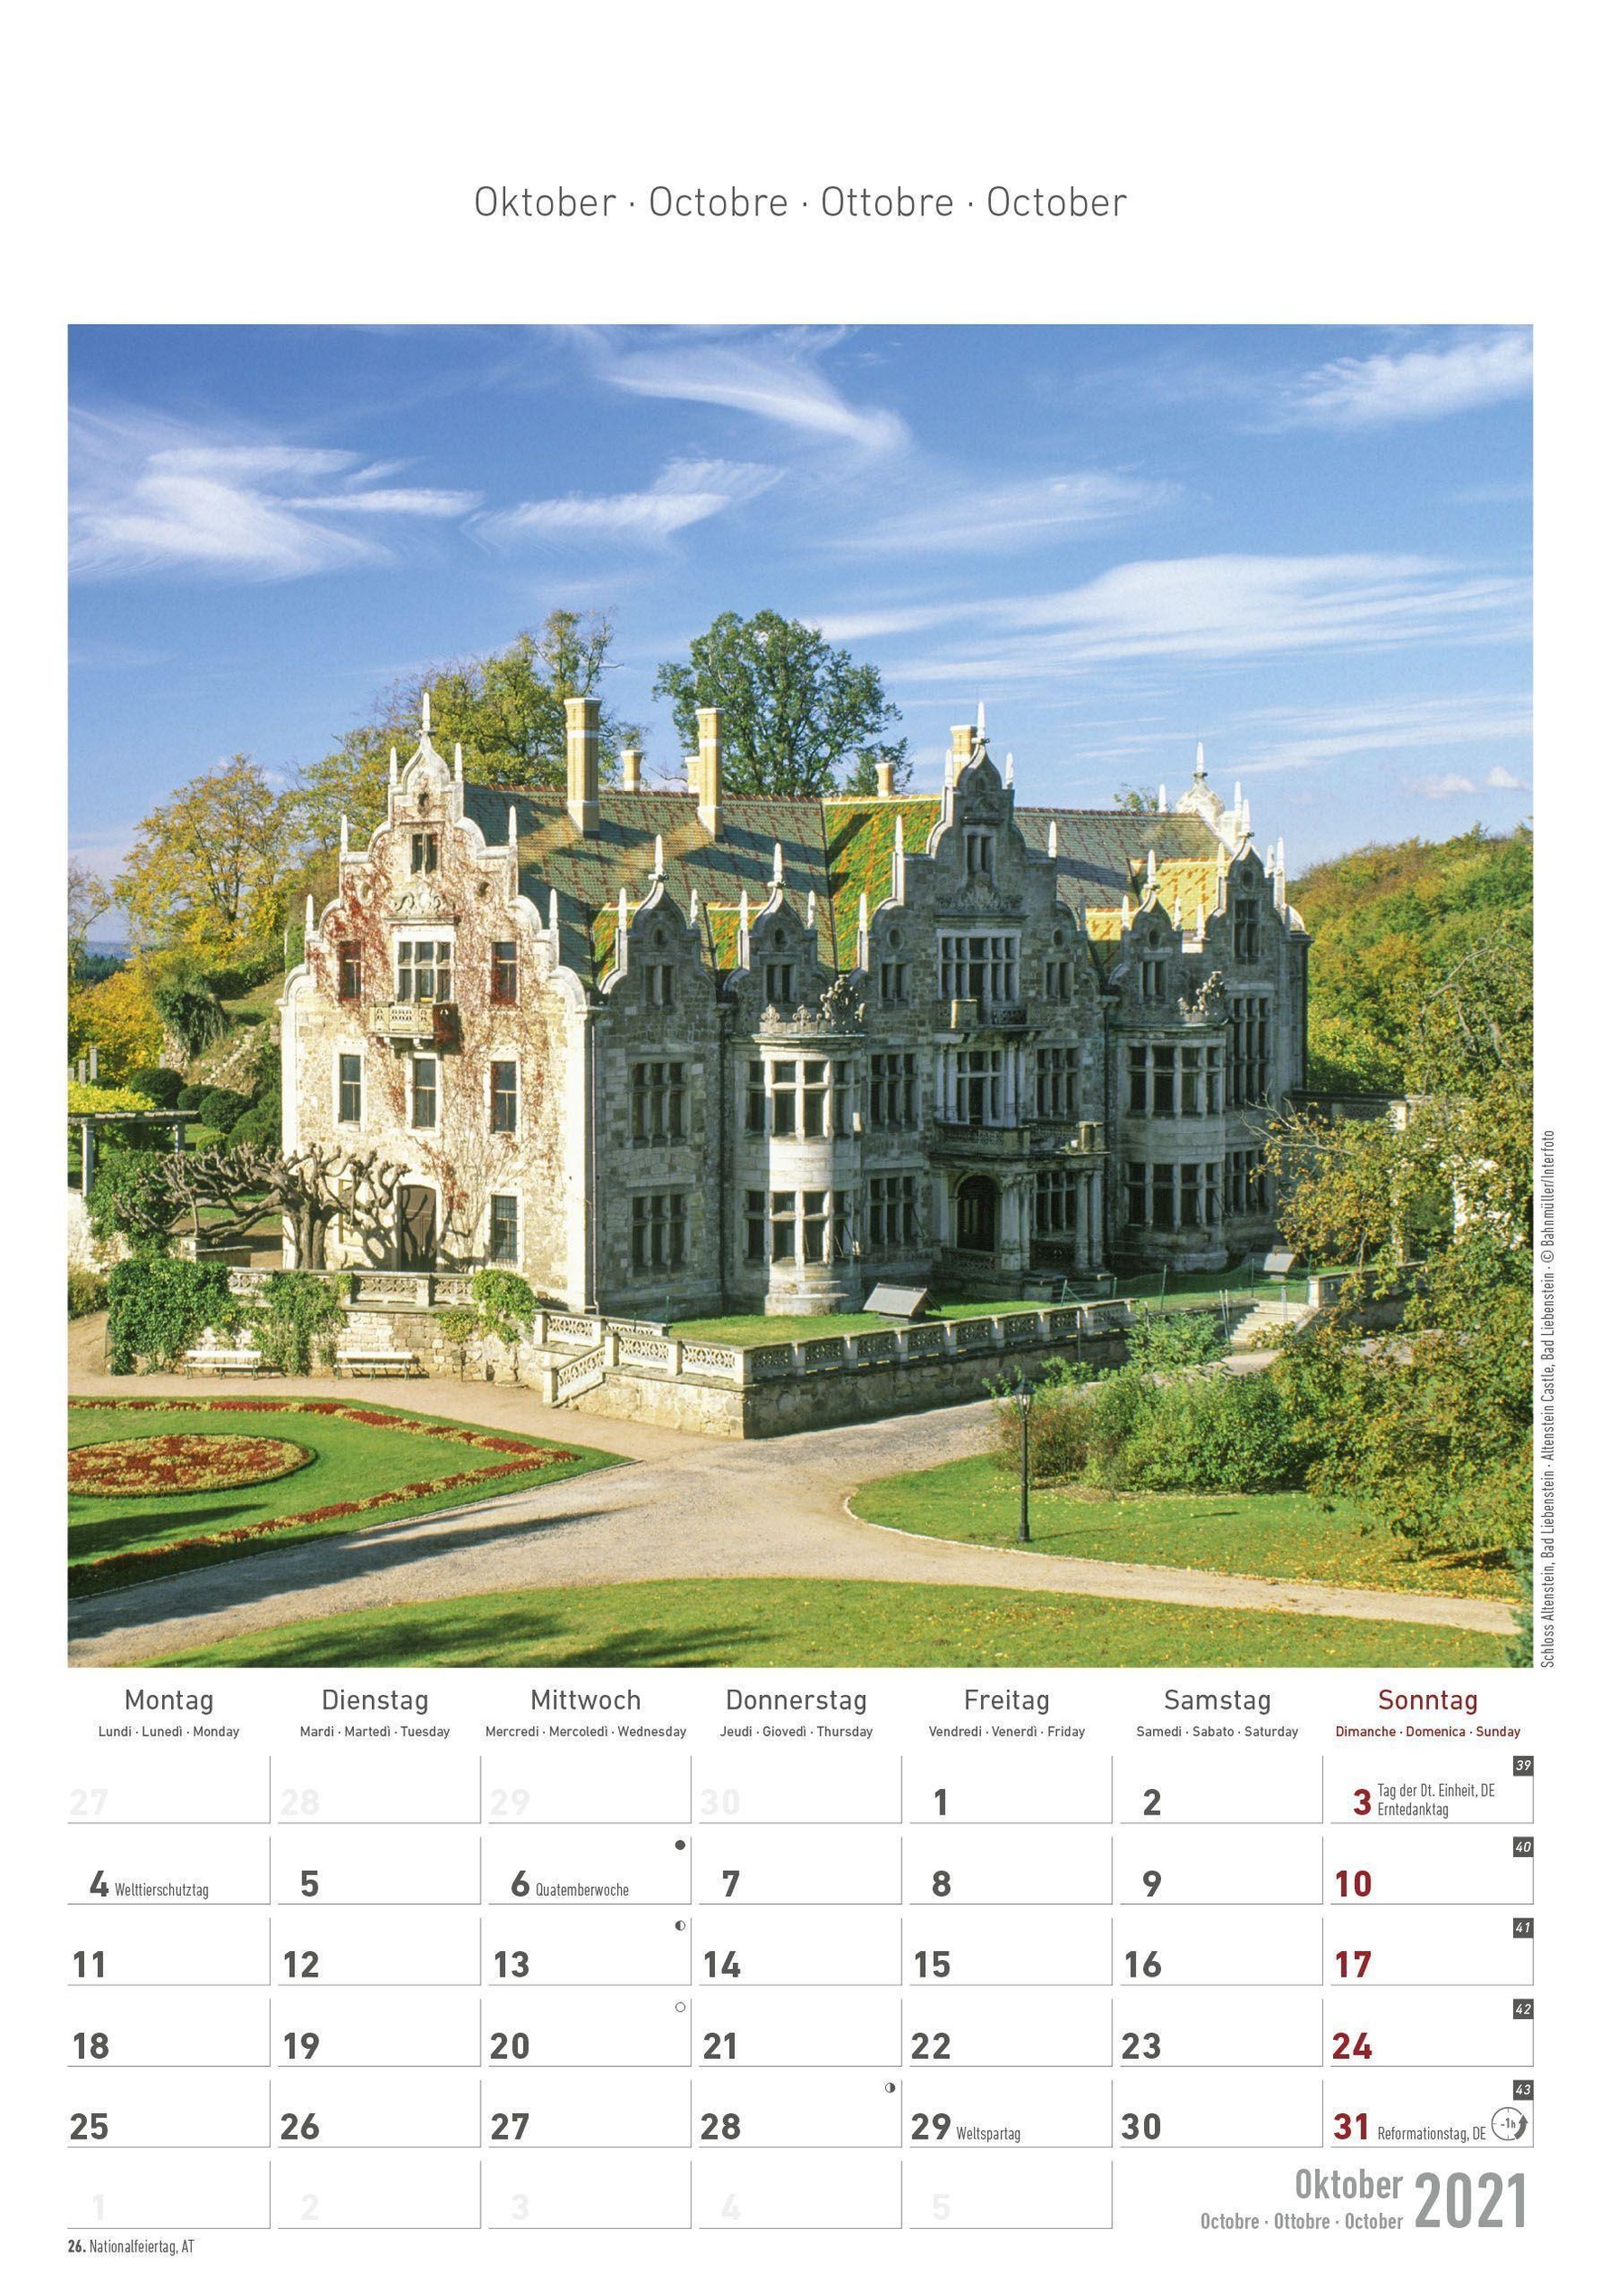 Thüringen 2021 - Kalender jetzt günstig bei Weltbild.de bestellen